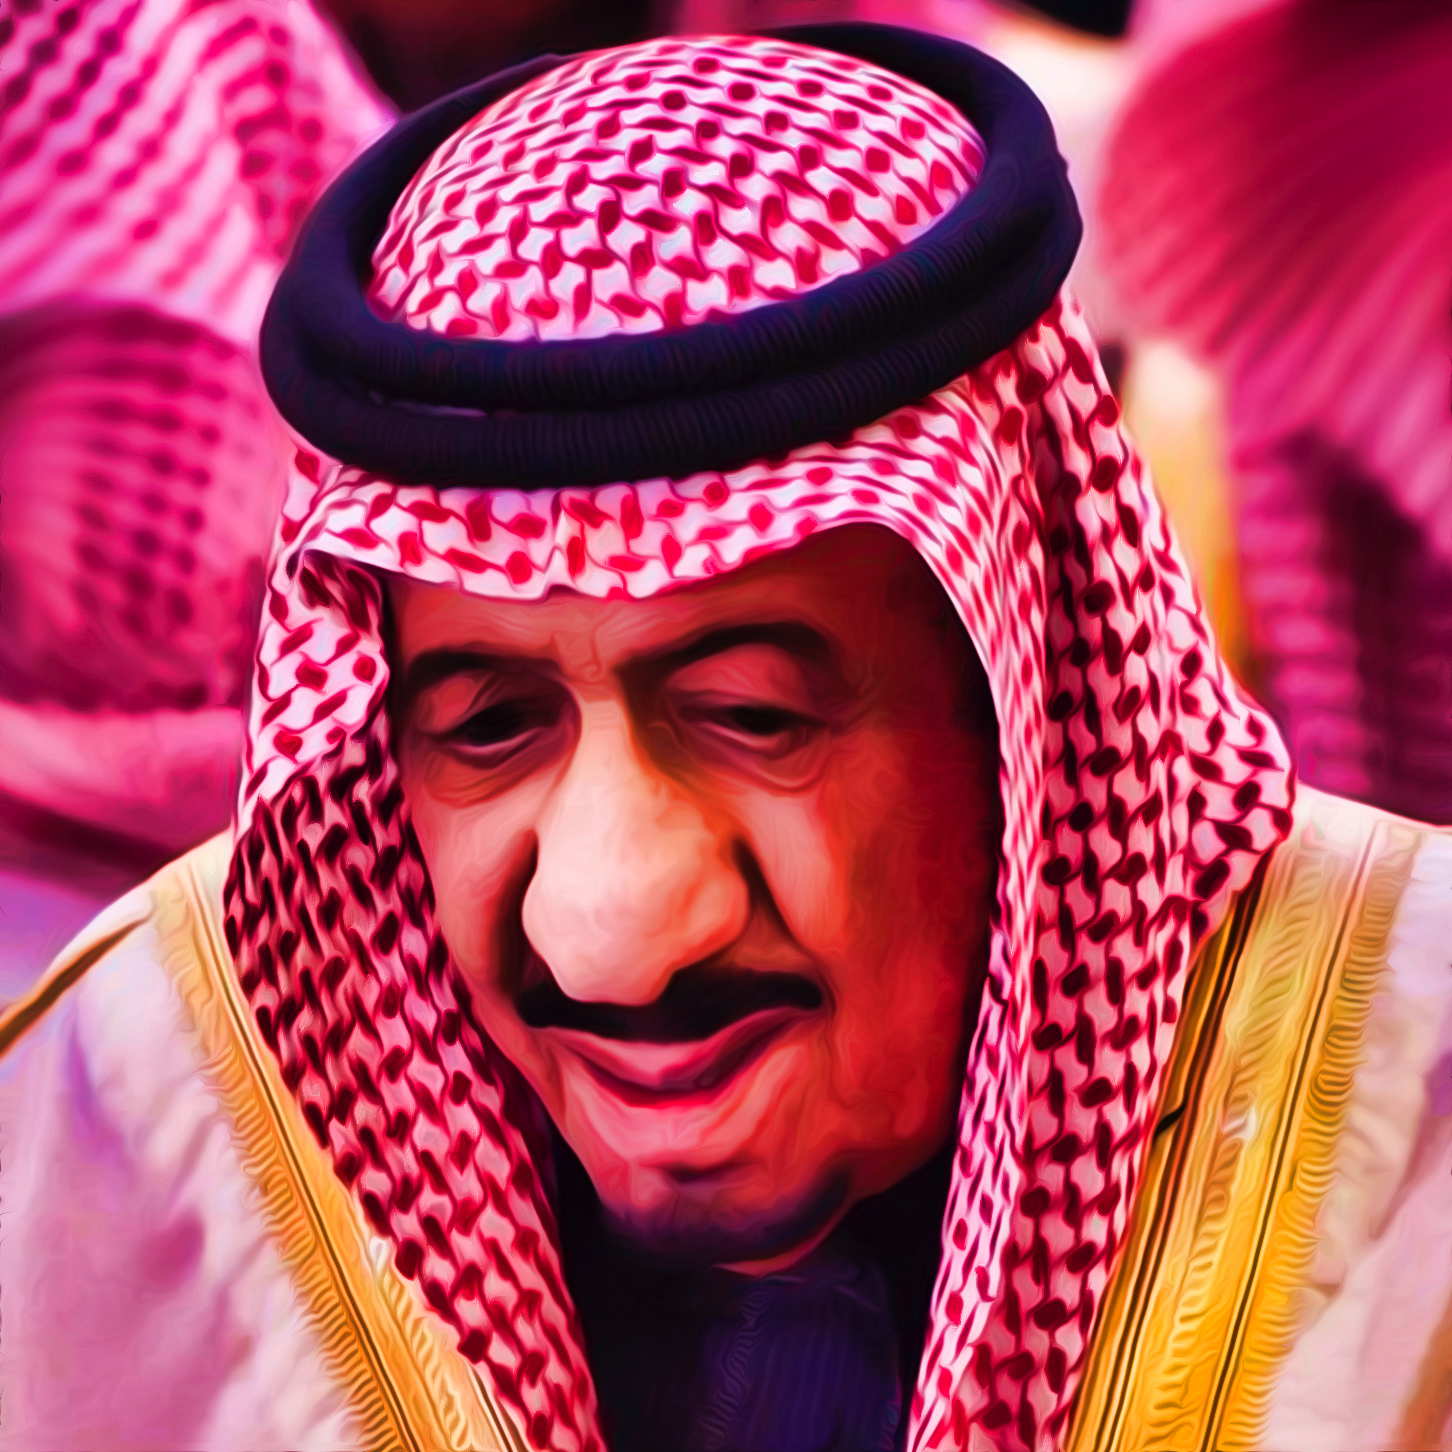 Koenig Salman ibn Abd al-Aziz Saudi-Arabien Diktatur Feudalismus Herrscher Thronfolger Friedensnobelpreis Anwaerter